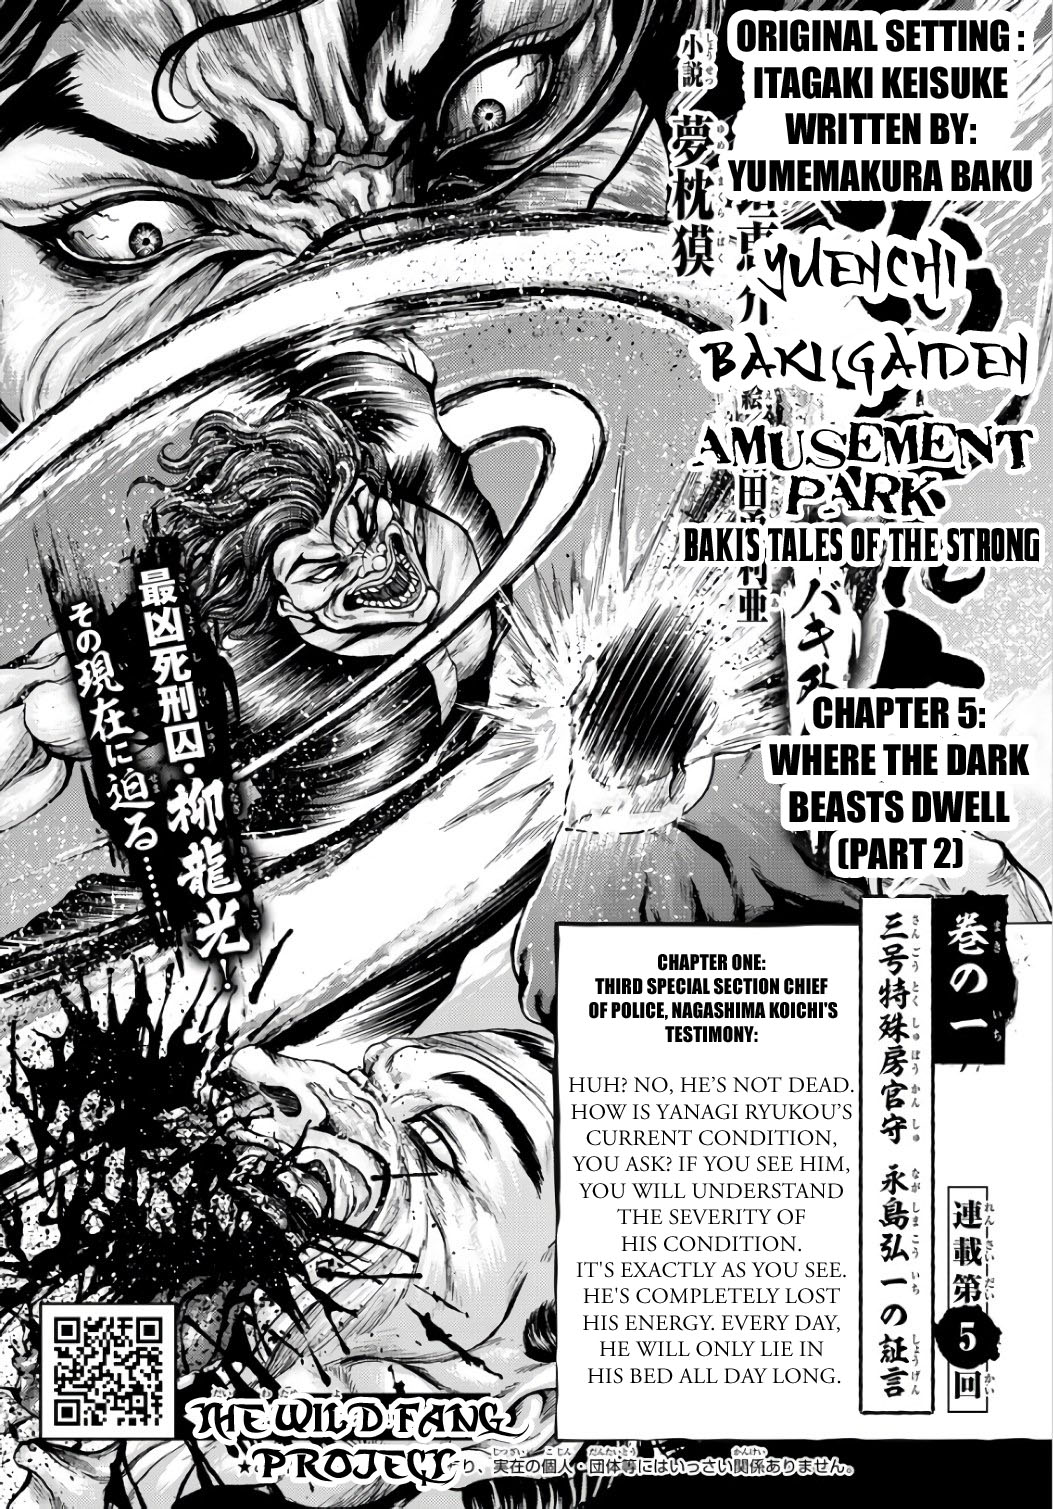 Yuenchi: Baki Gaiden Vol. 1 Ch. 5 Where the dark beasts dwell (part 2)